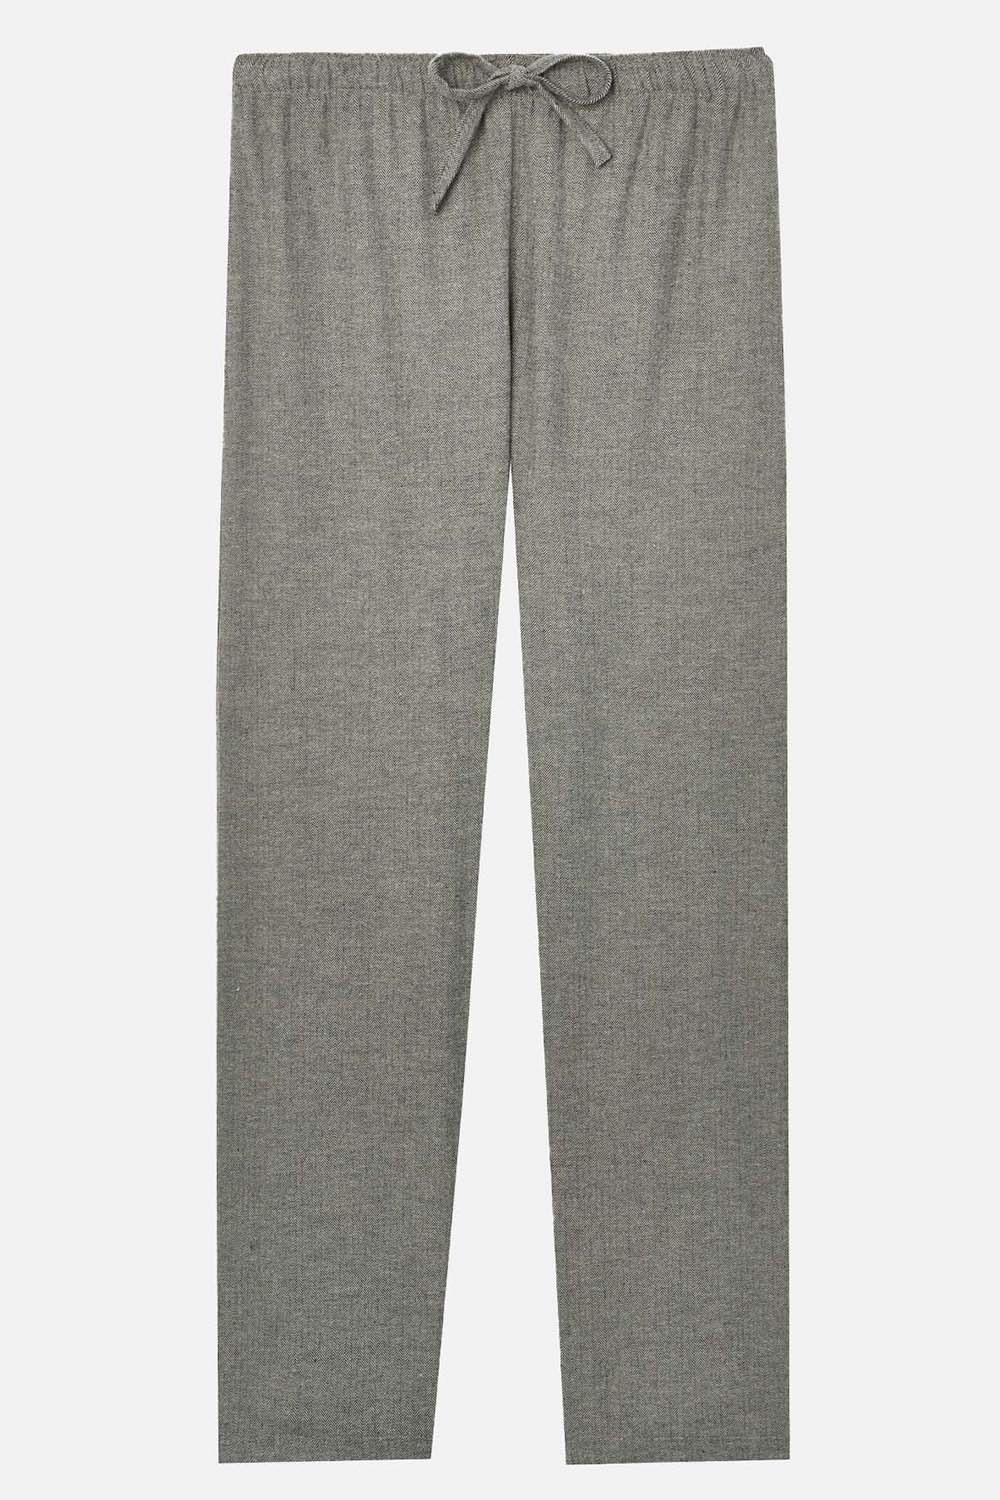 Whitby Jet Herringbone Mens Cotton Pyjama Trousers -